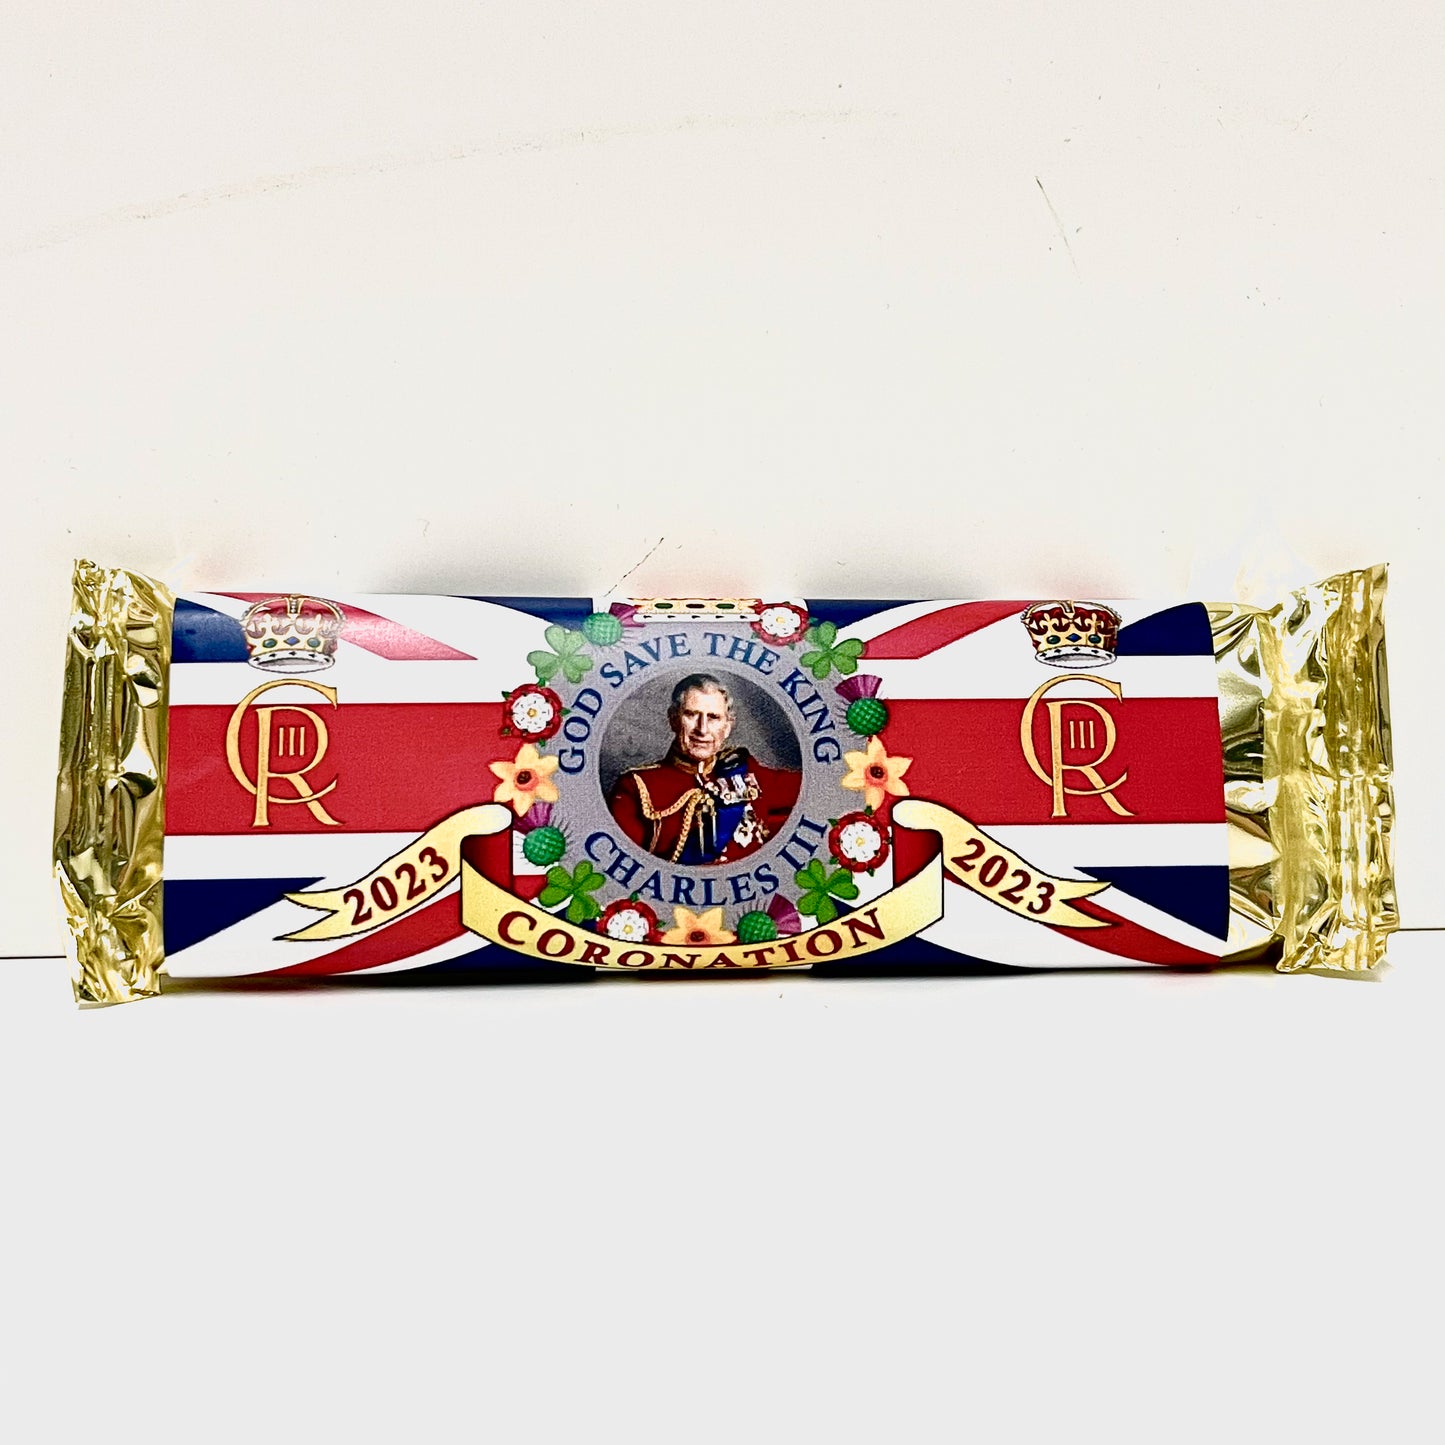 The Coronation King Charles III Chocolate Bar